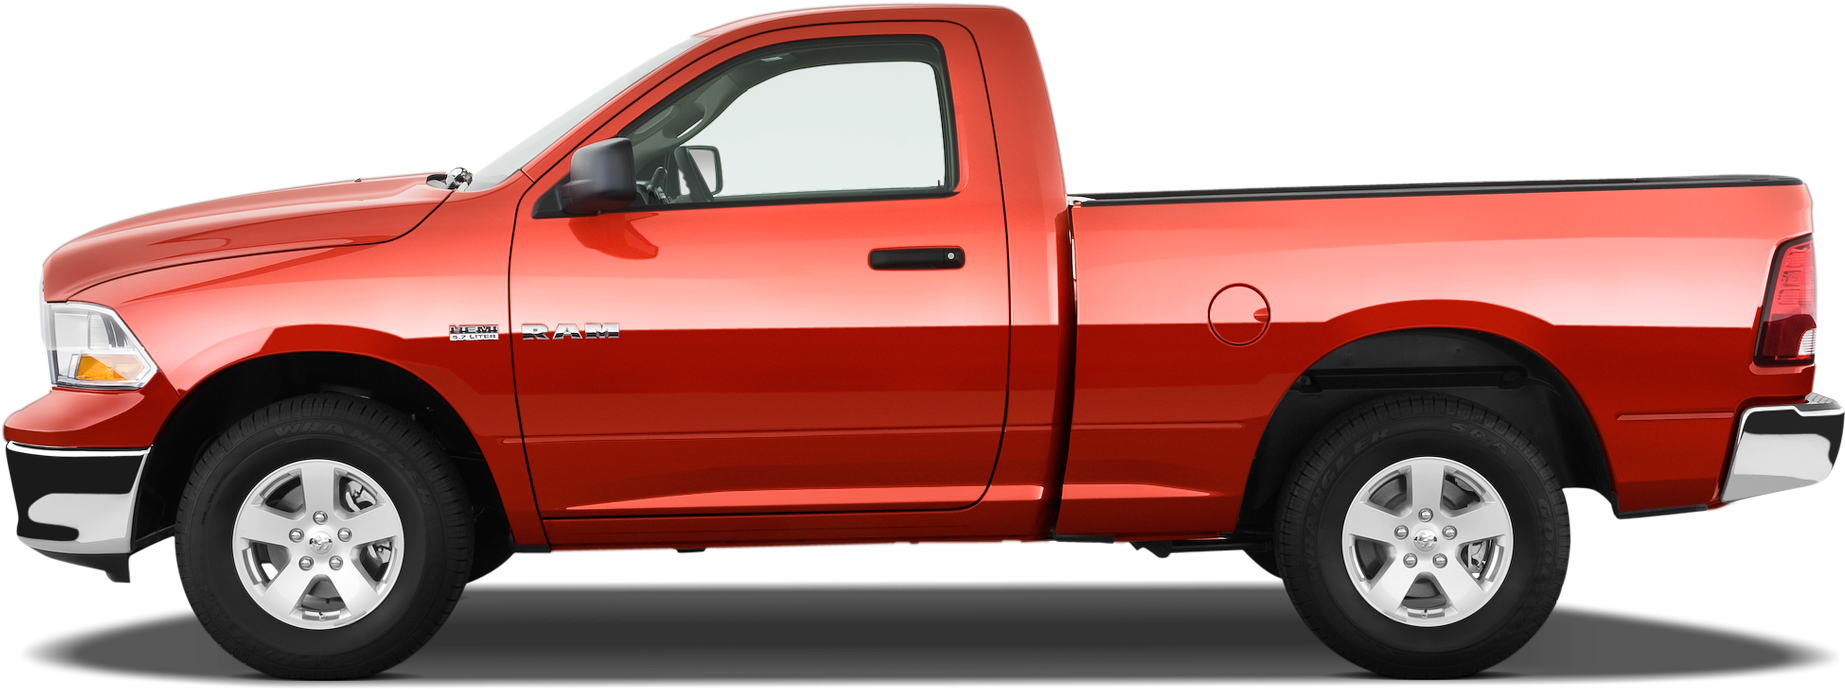 Dodge Truck Transparent Image